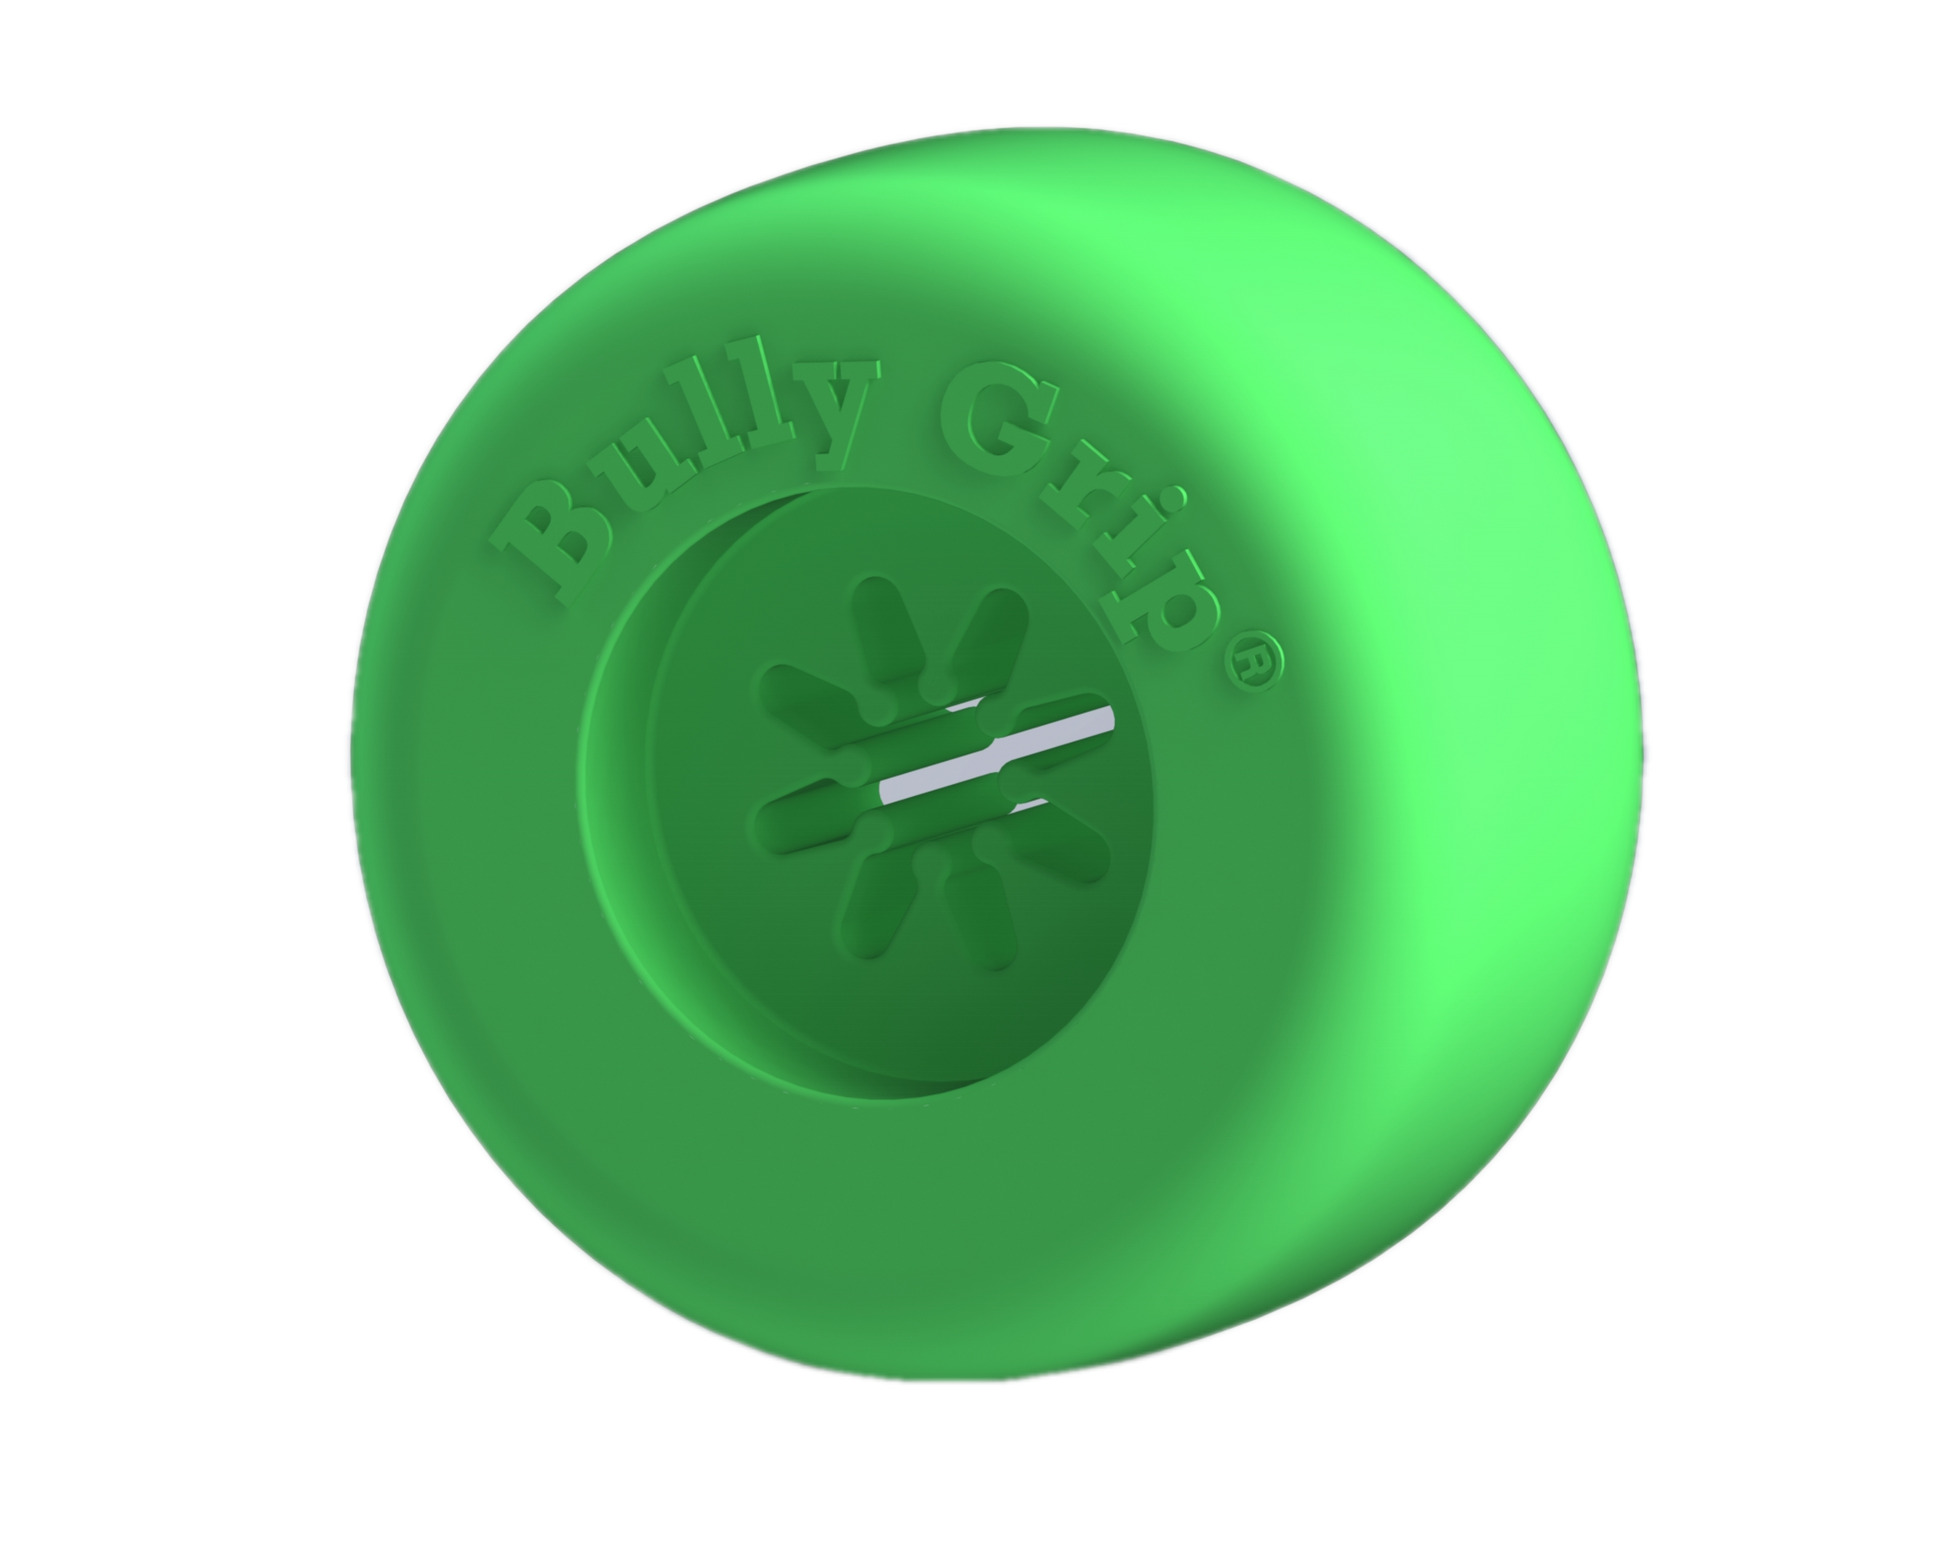 Bully Grip - Bully stick holder